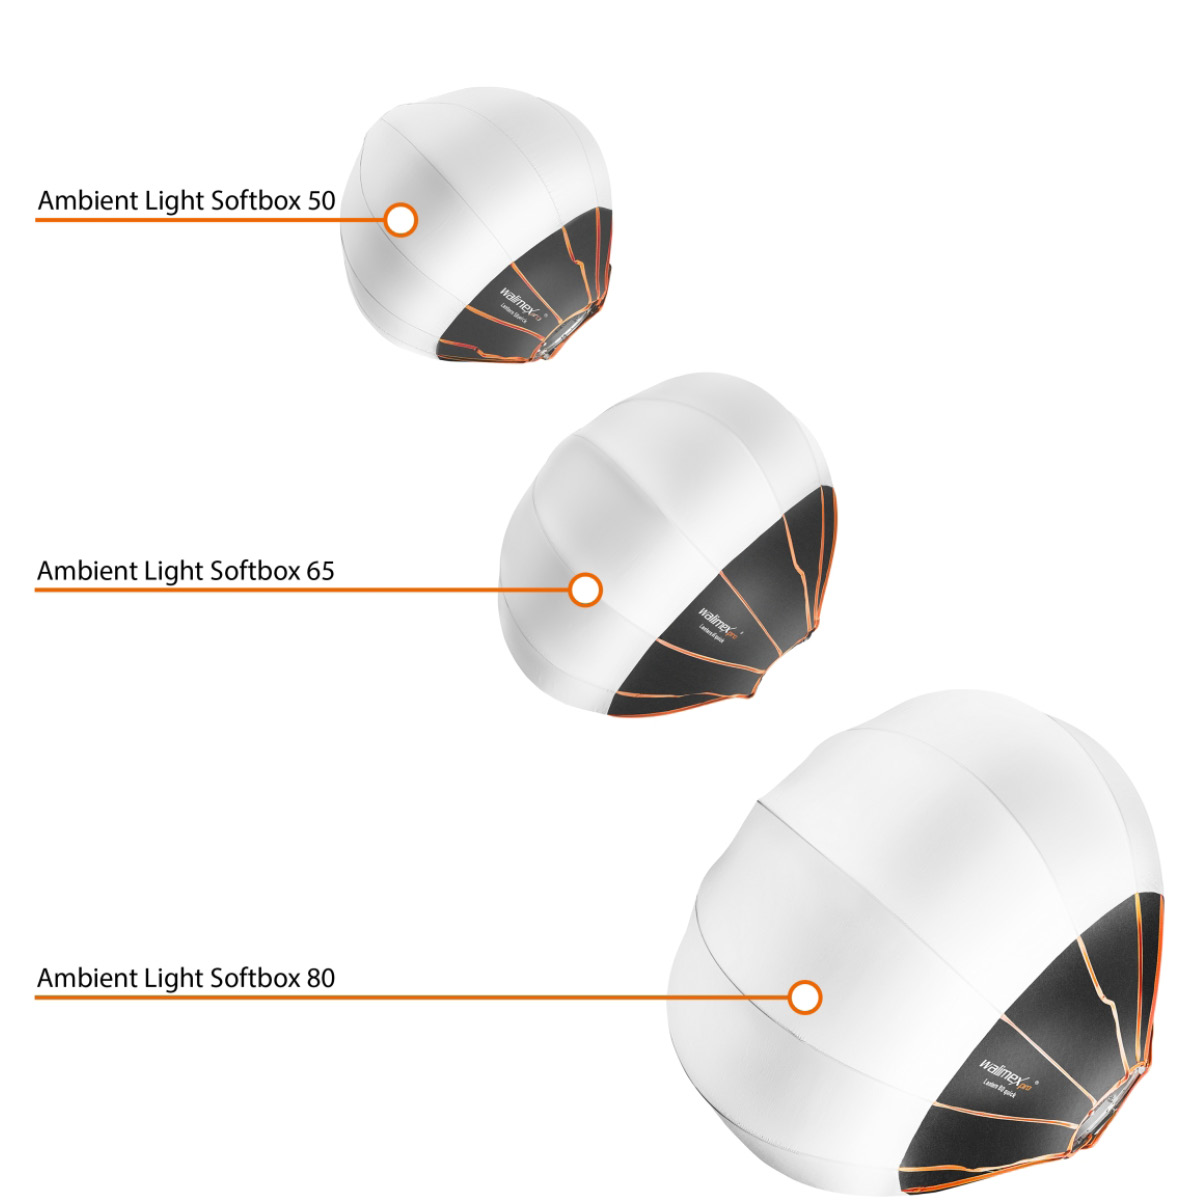 Walimex pro 360° Ambient Light Softbox 50 cm Multiblitz P